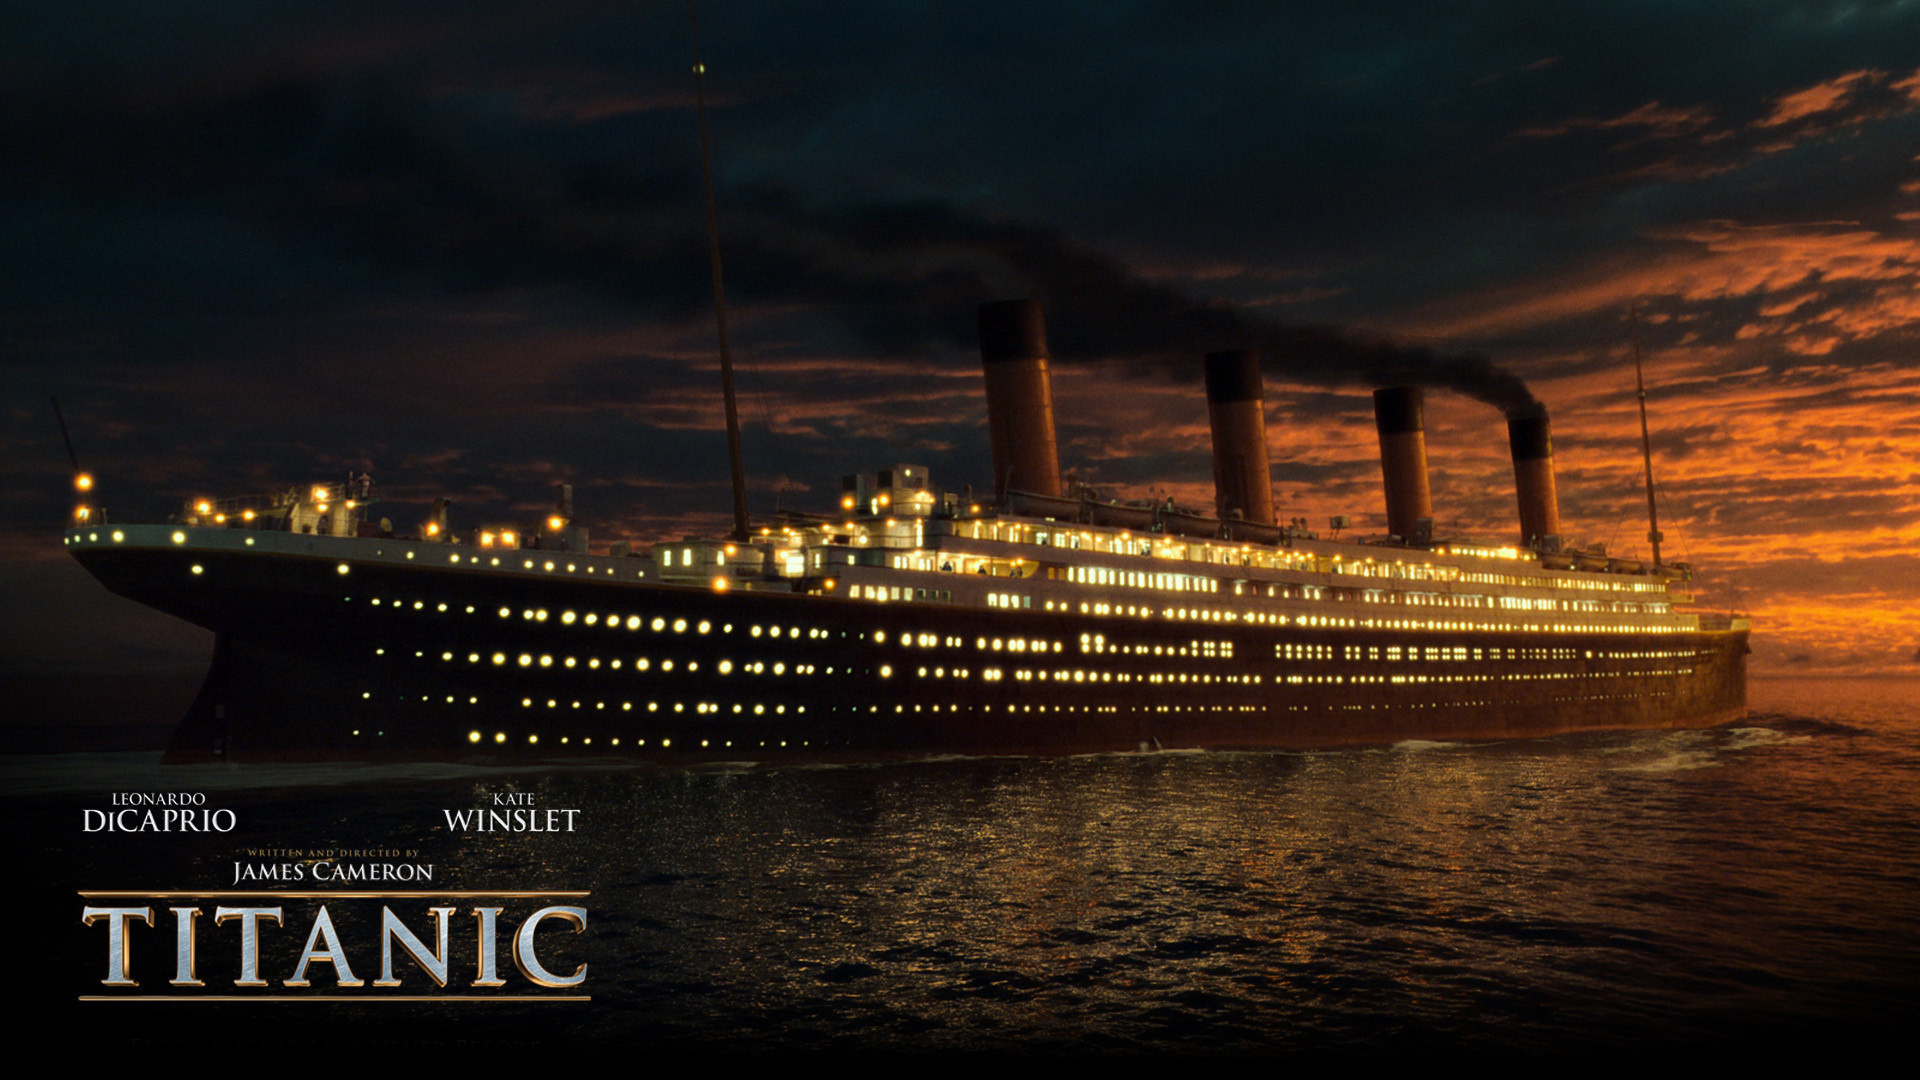 Titanic Sinking Poster Wallpaper Viewallpaper.com